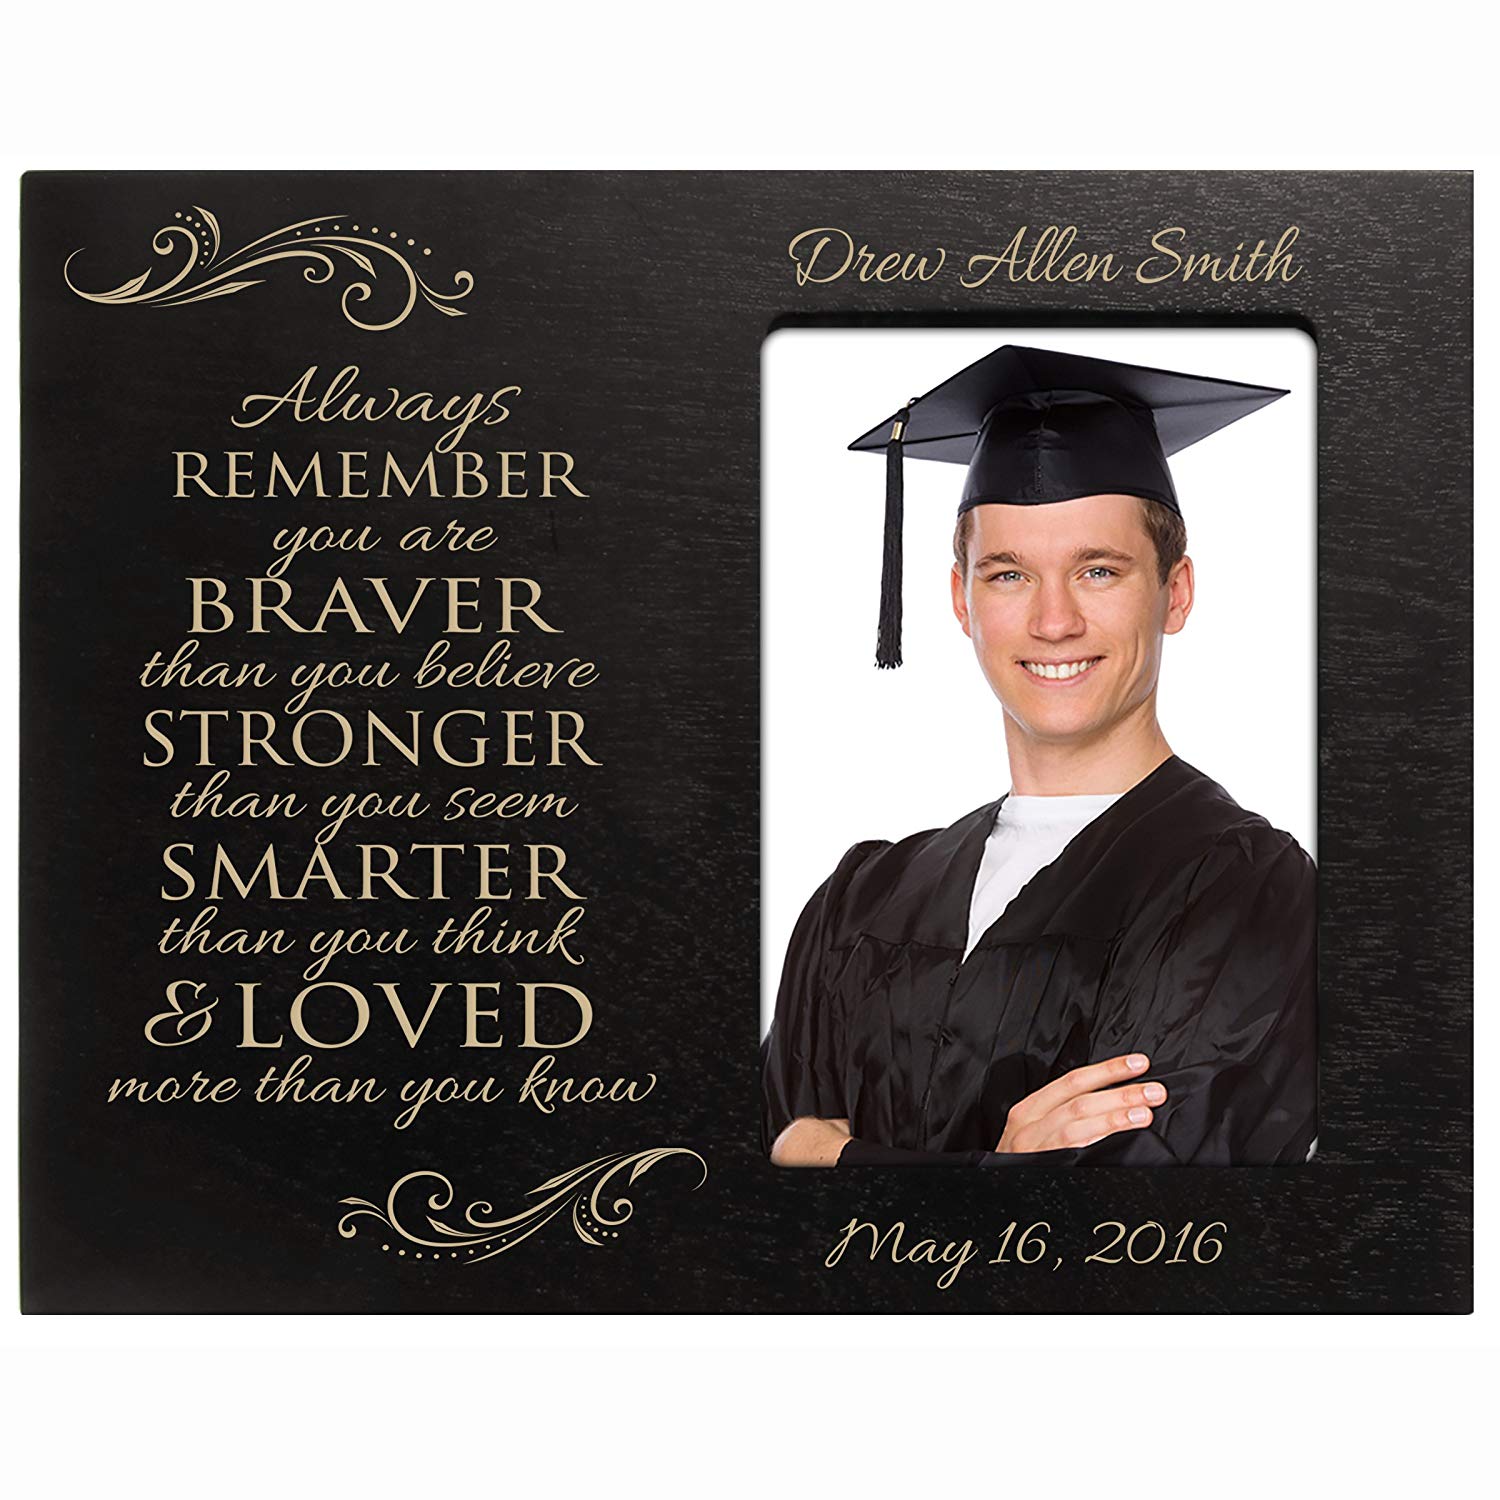 Personalized Graduation Photo Frame - Always Remember - LifeSong Milestones